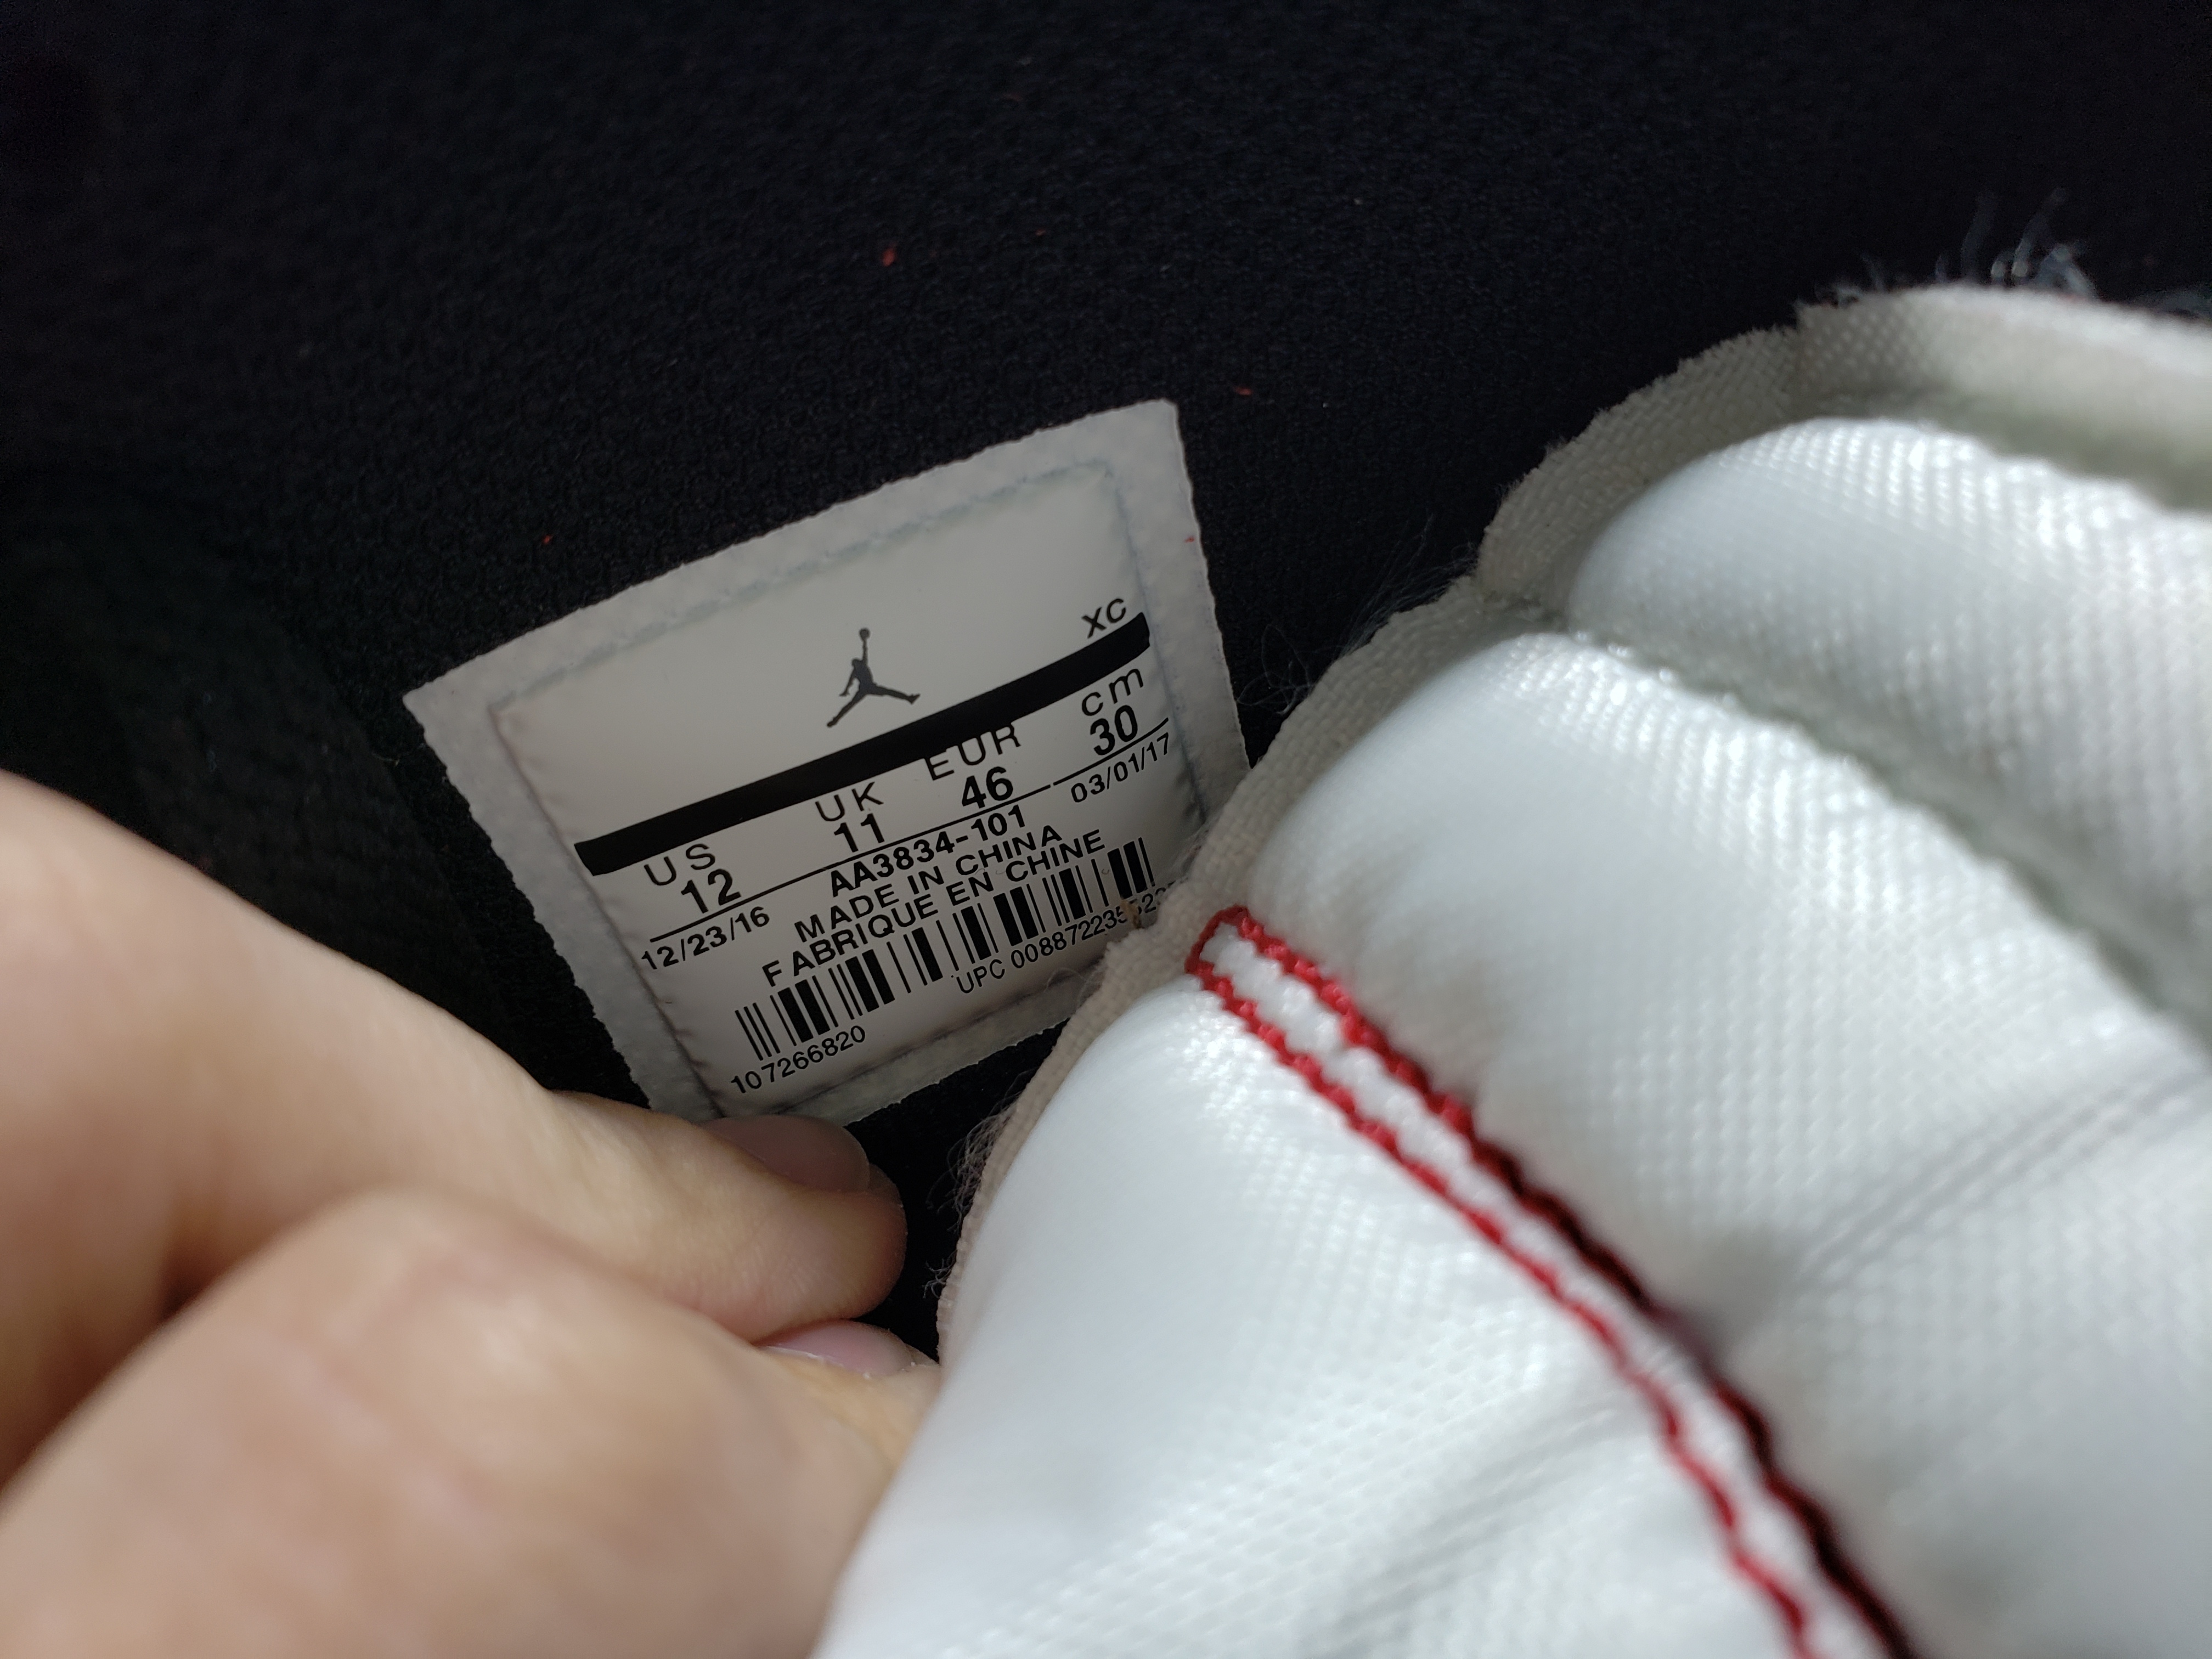 Supreme Air Jordan Brand Clothing, Wmns Air Jordan 1 Mid 'Lemon Yellow'  CK6587-200 quantity